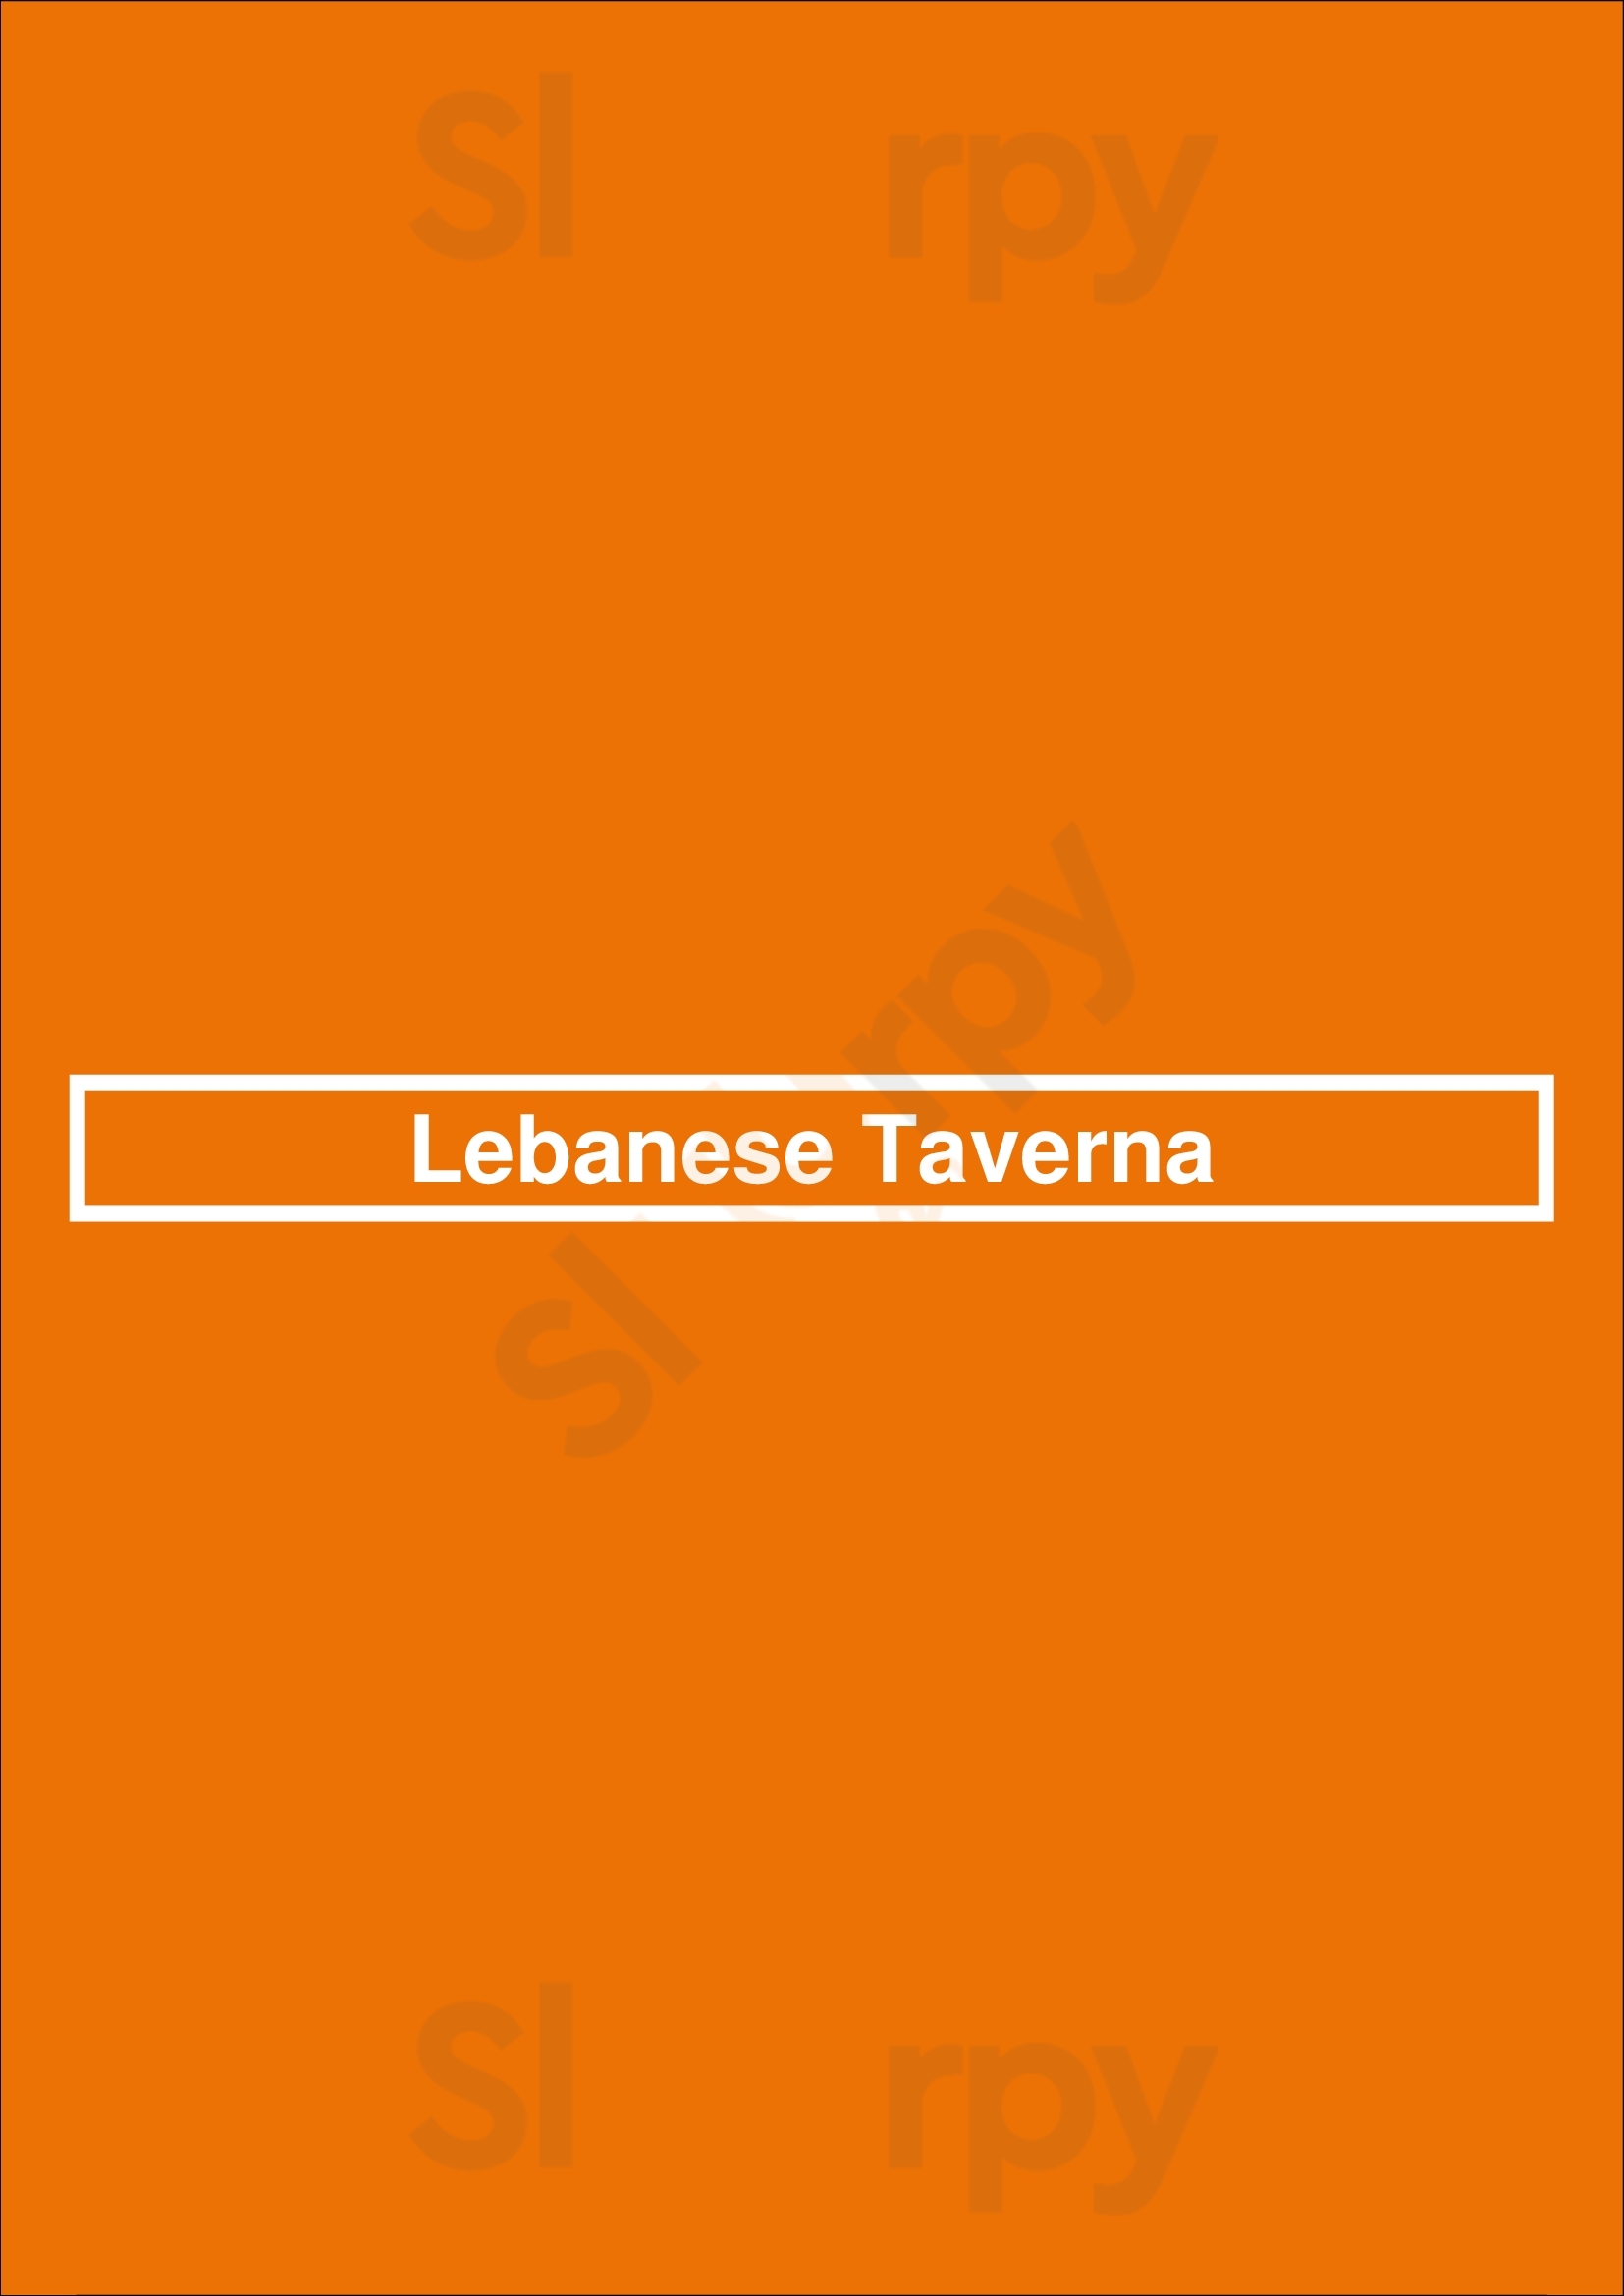 Lebanese Taverna Arlington Menu - 1